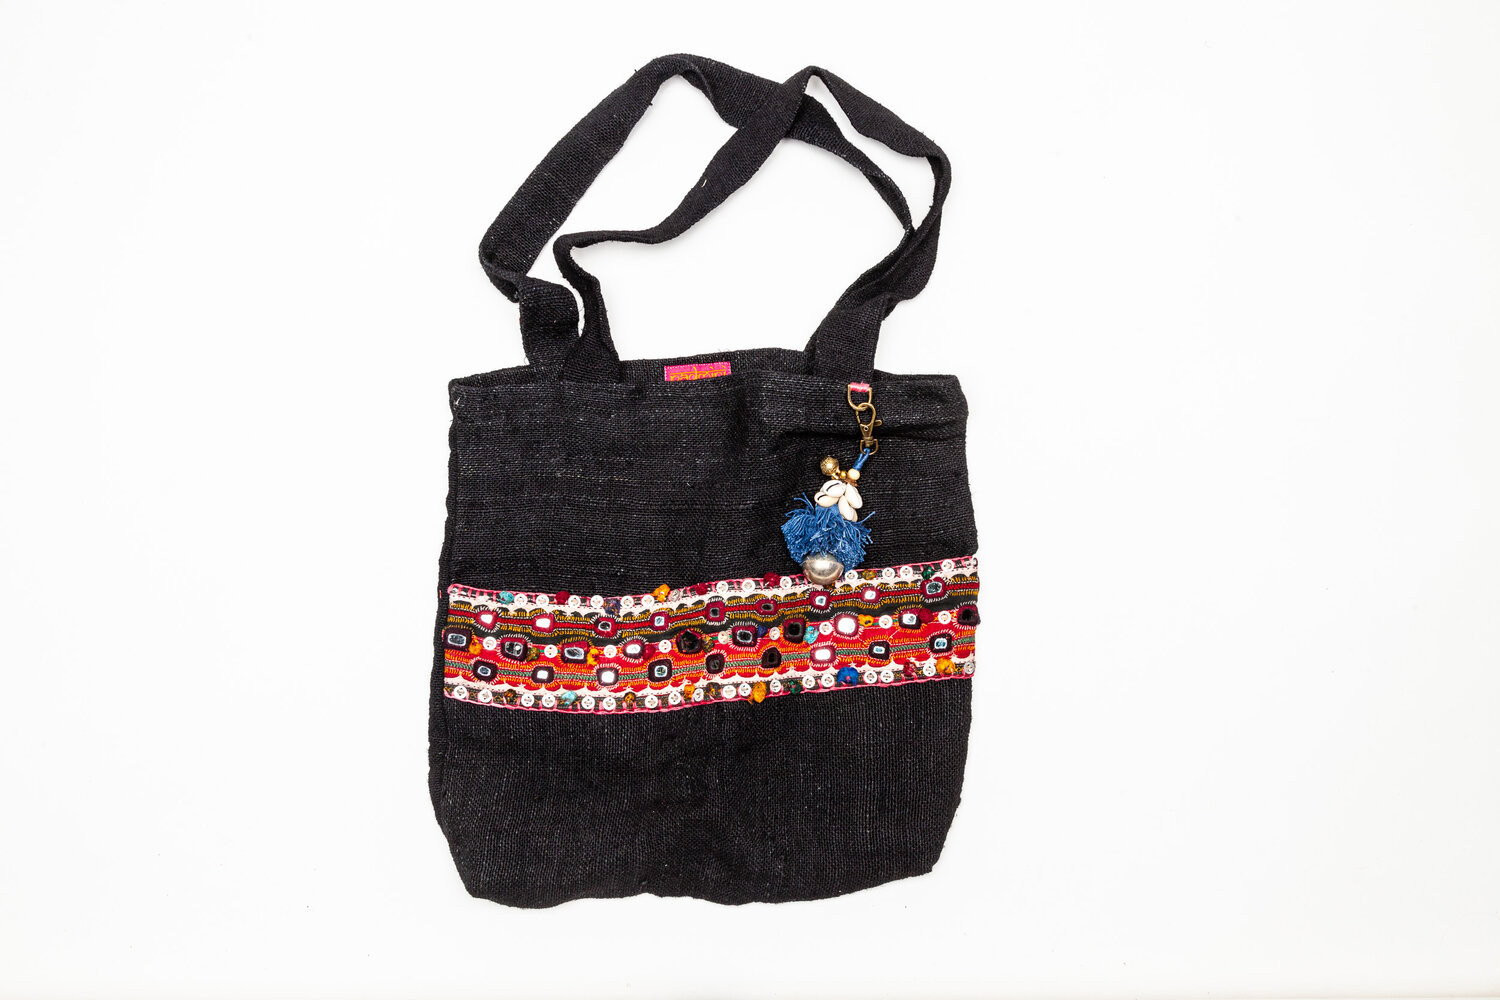 Colourful Hippie Bag - Multi-coloured Bohemian Embroidered Handbag